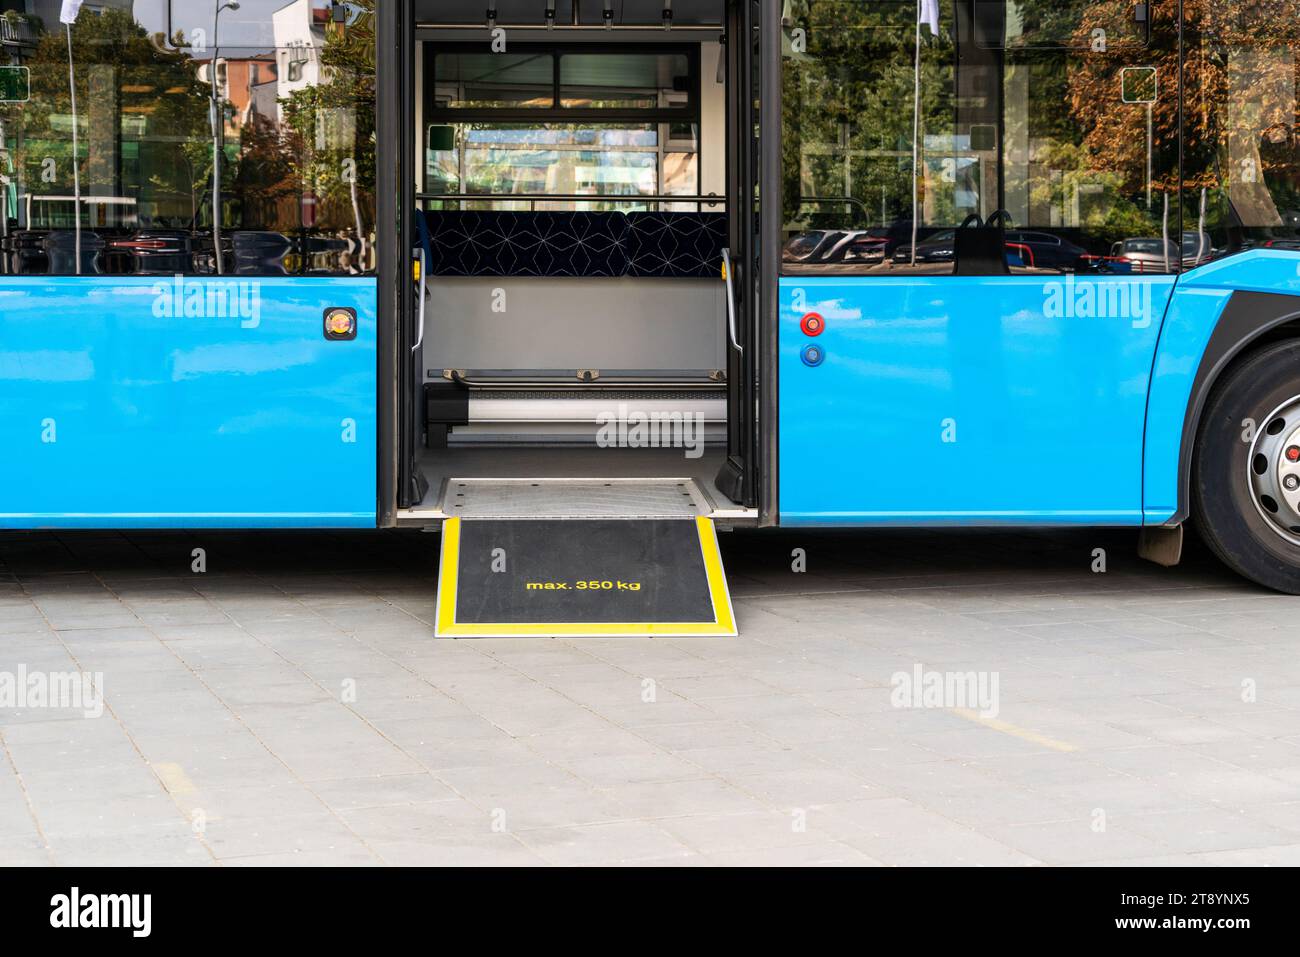 Bus ramp low floor. Accessibility in public transport. Bus ramp low floor. Stock Photo